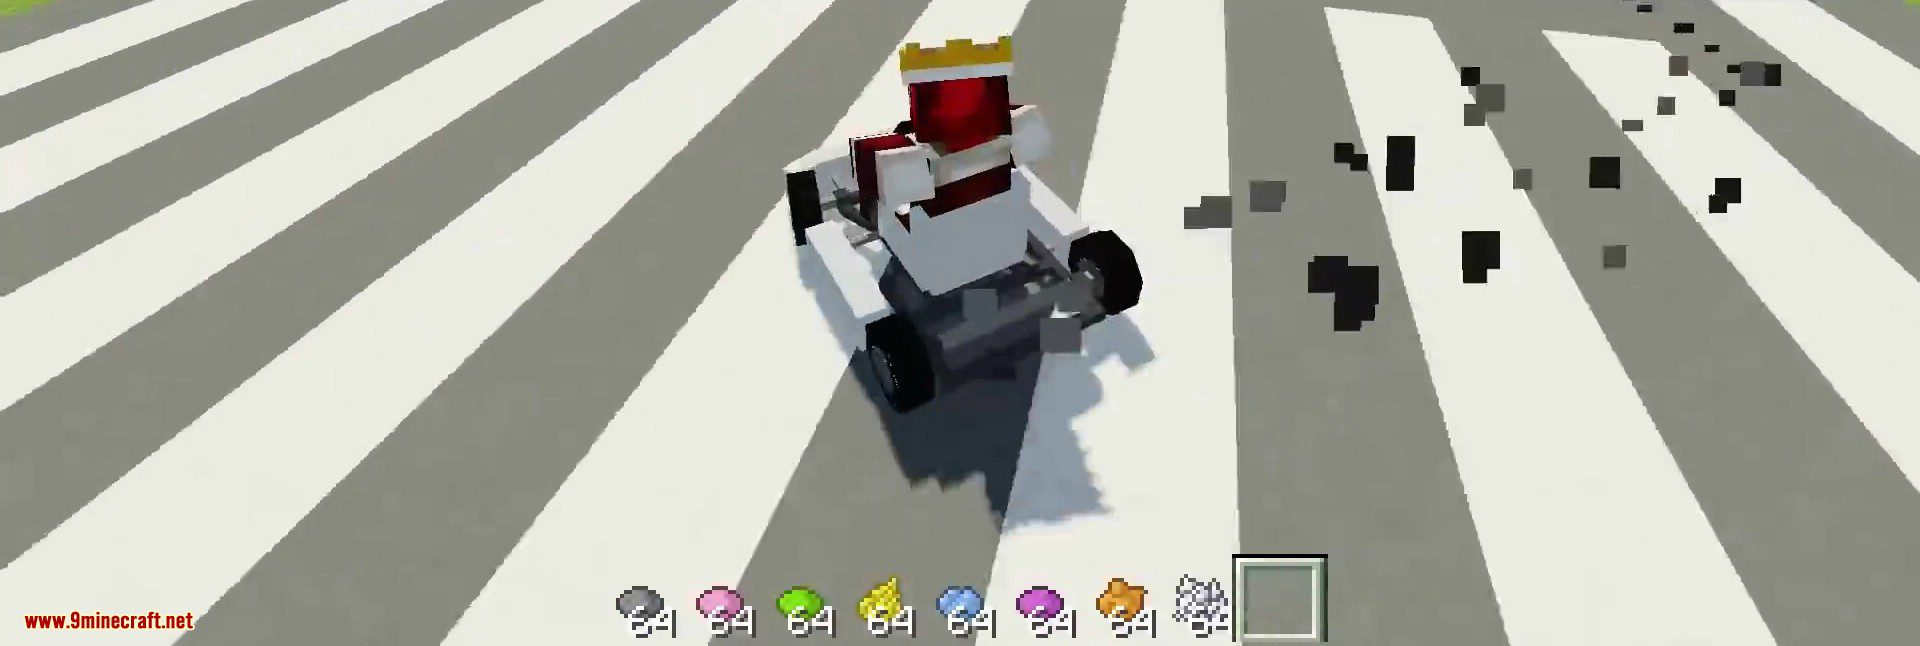 MrCrayfish’s Vehicle Mod Screenshots 22